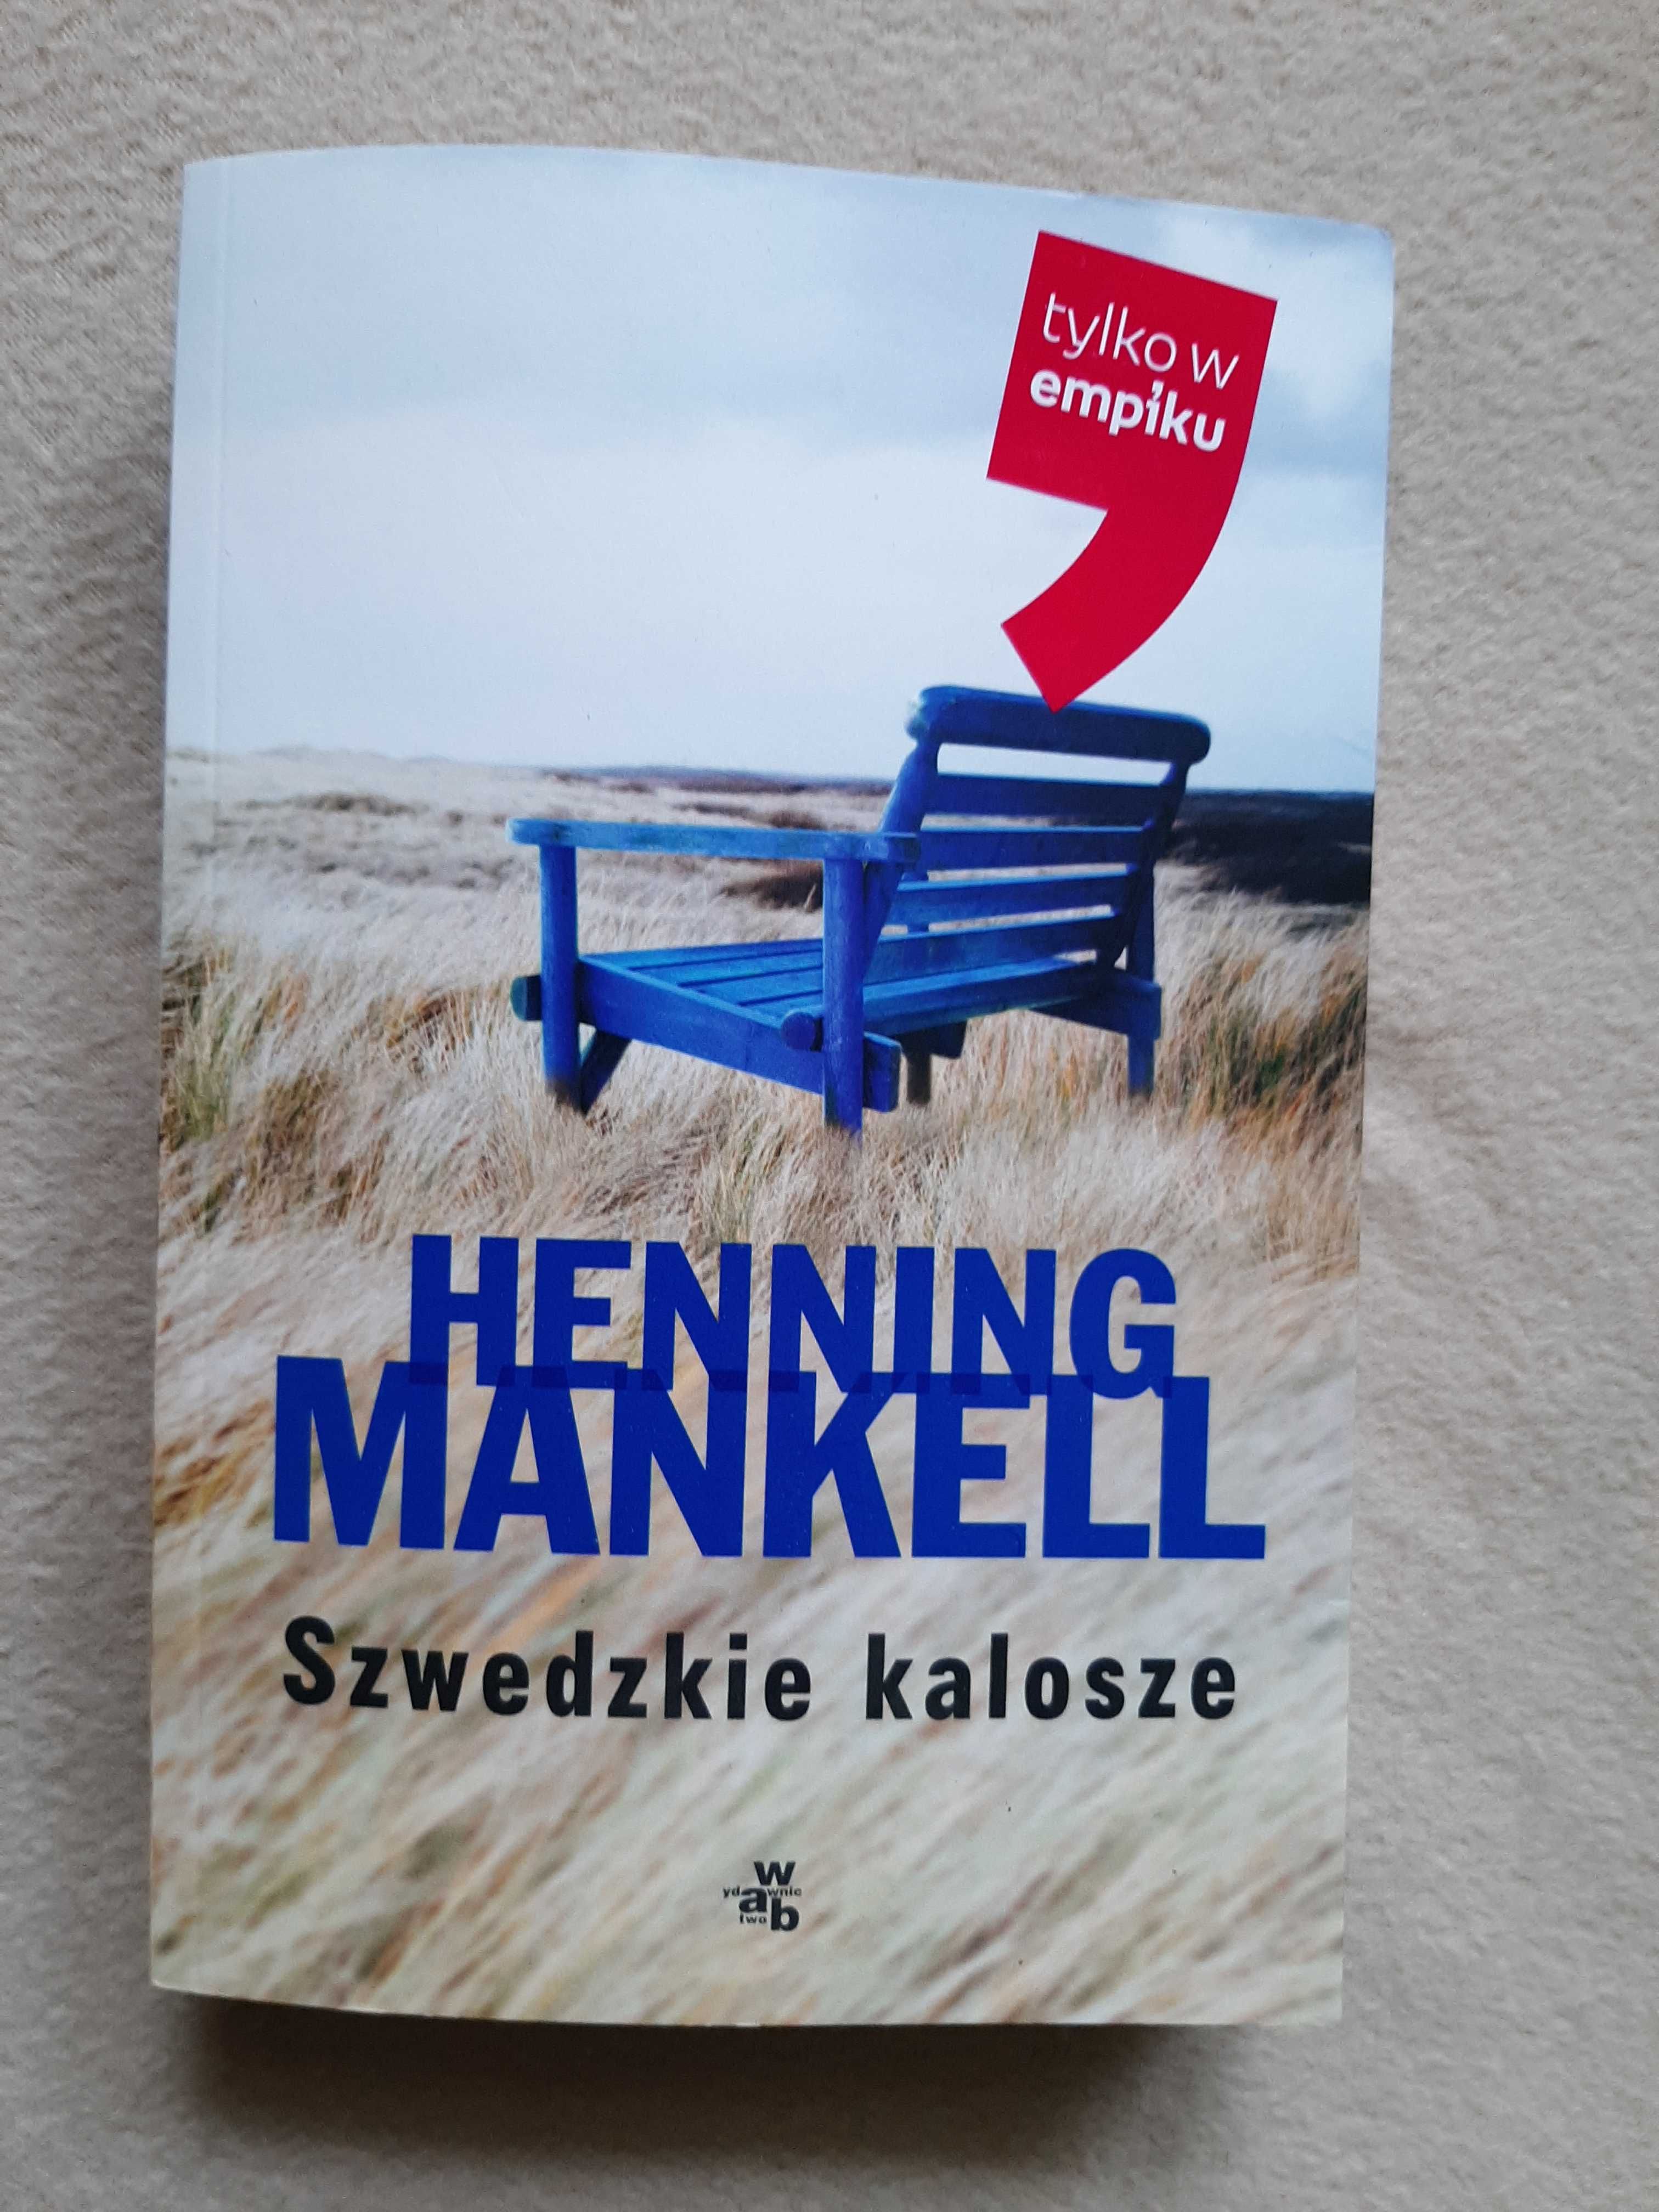 Szwedzkie kalosze Henning Mankell